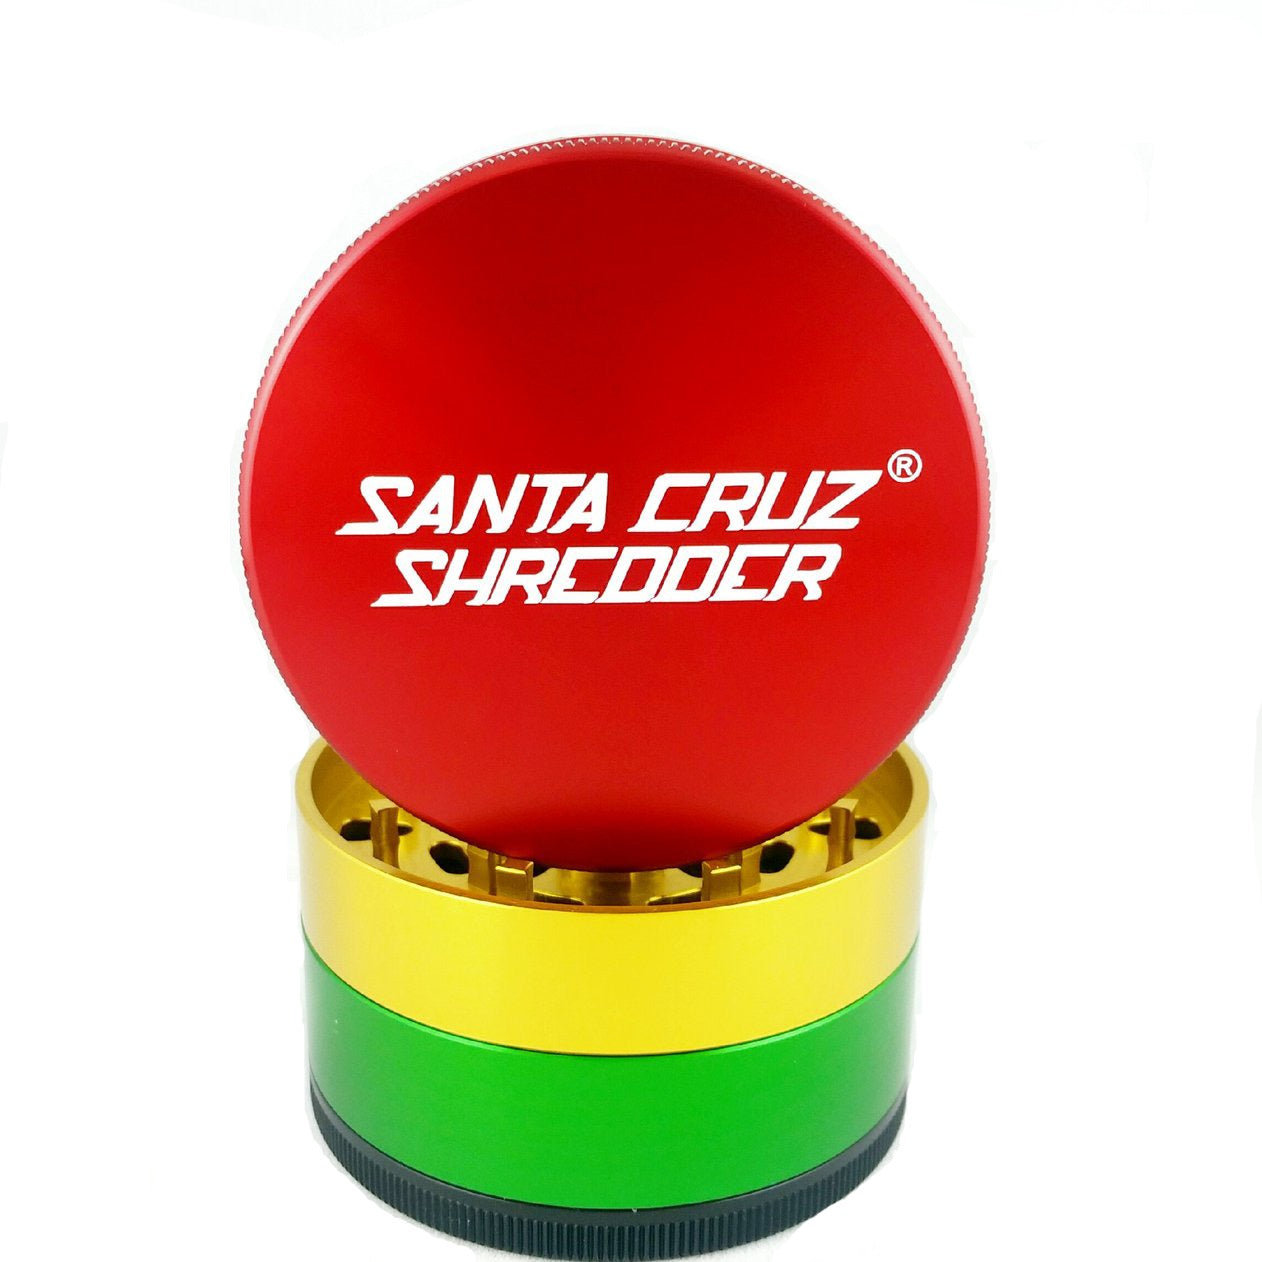 Santa Cruz Shredder Large 4 Piece Grinder (Rasta) show variants